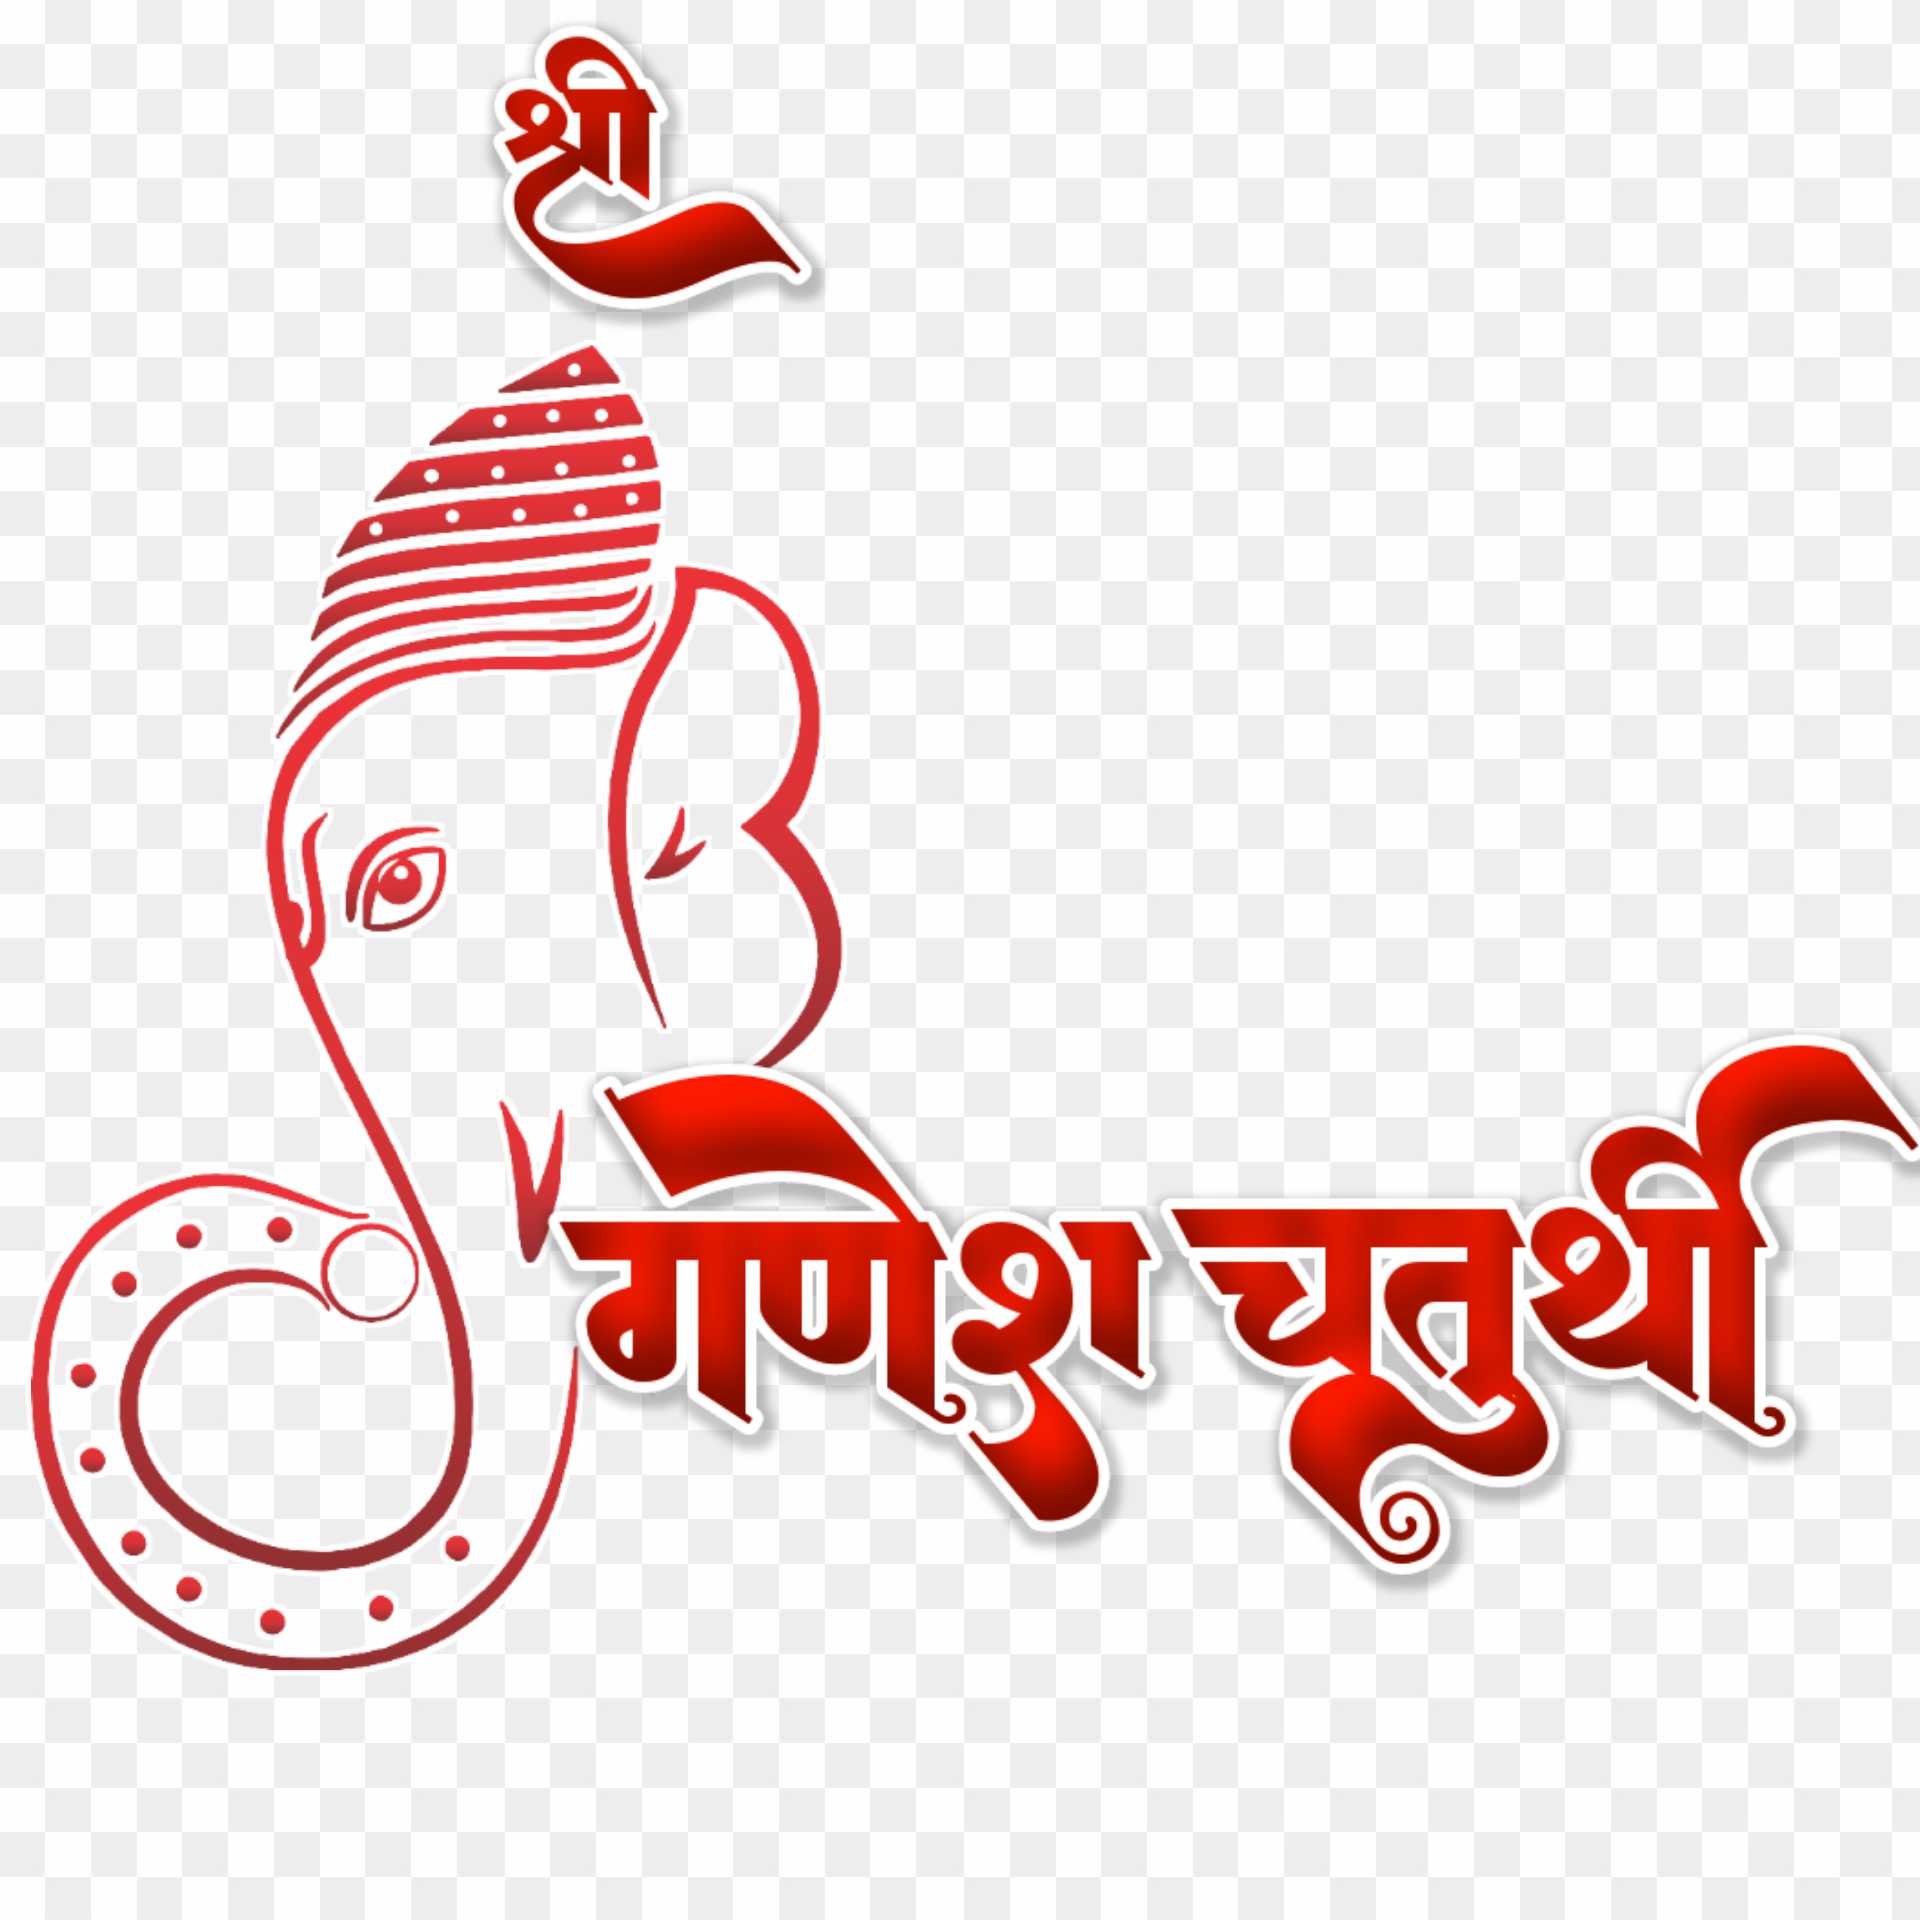 Shri Ganesh Chaturthi in Hindi PNG text images